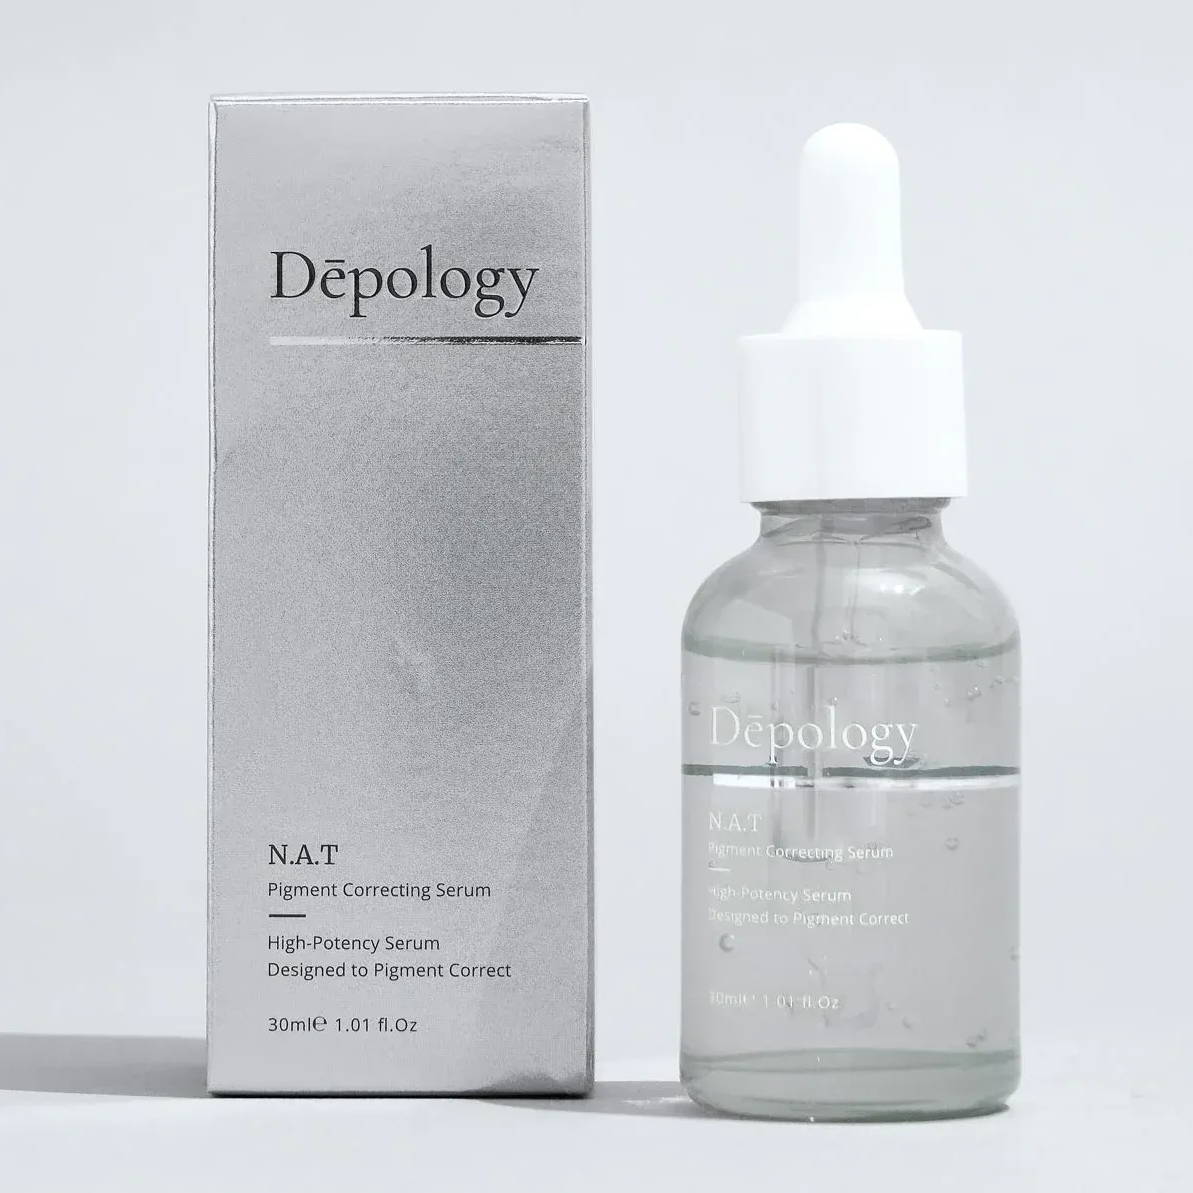 Depology Dark spot correcting serum transparent bottle